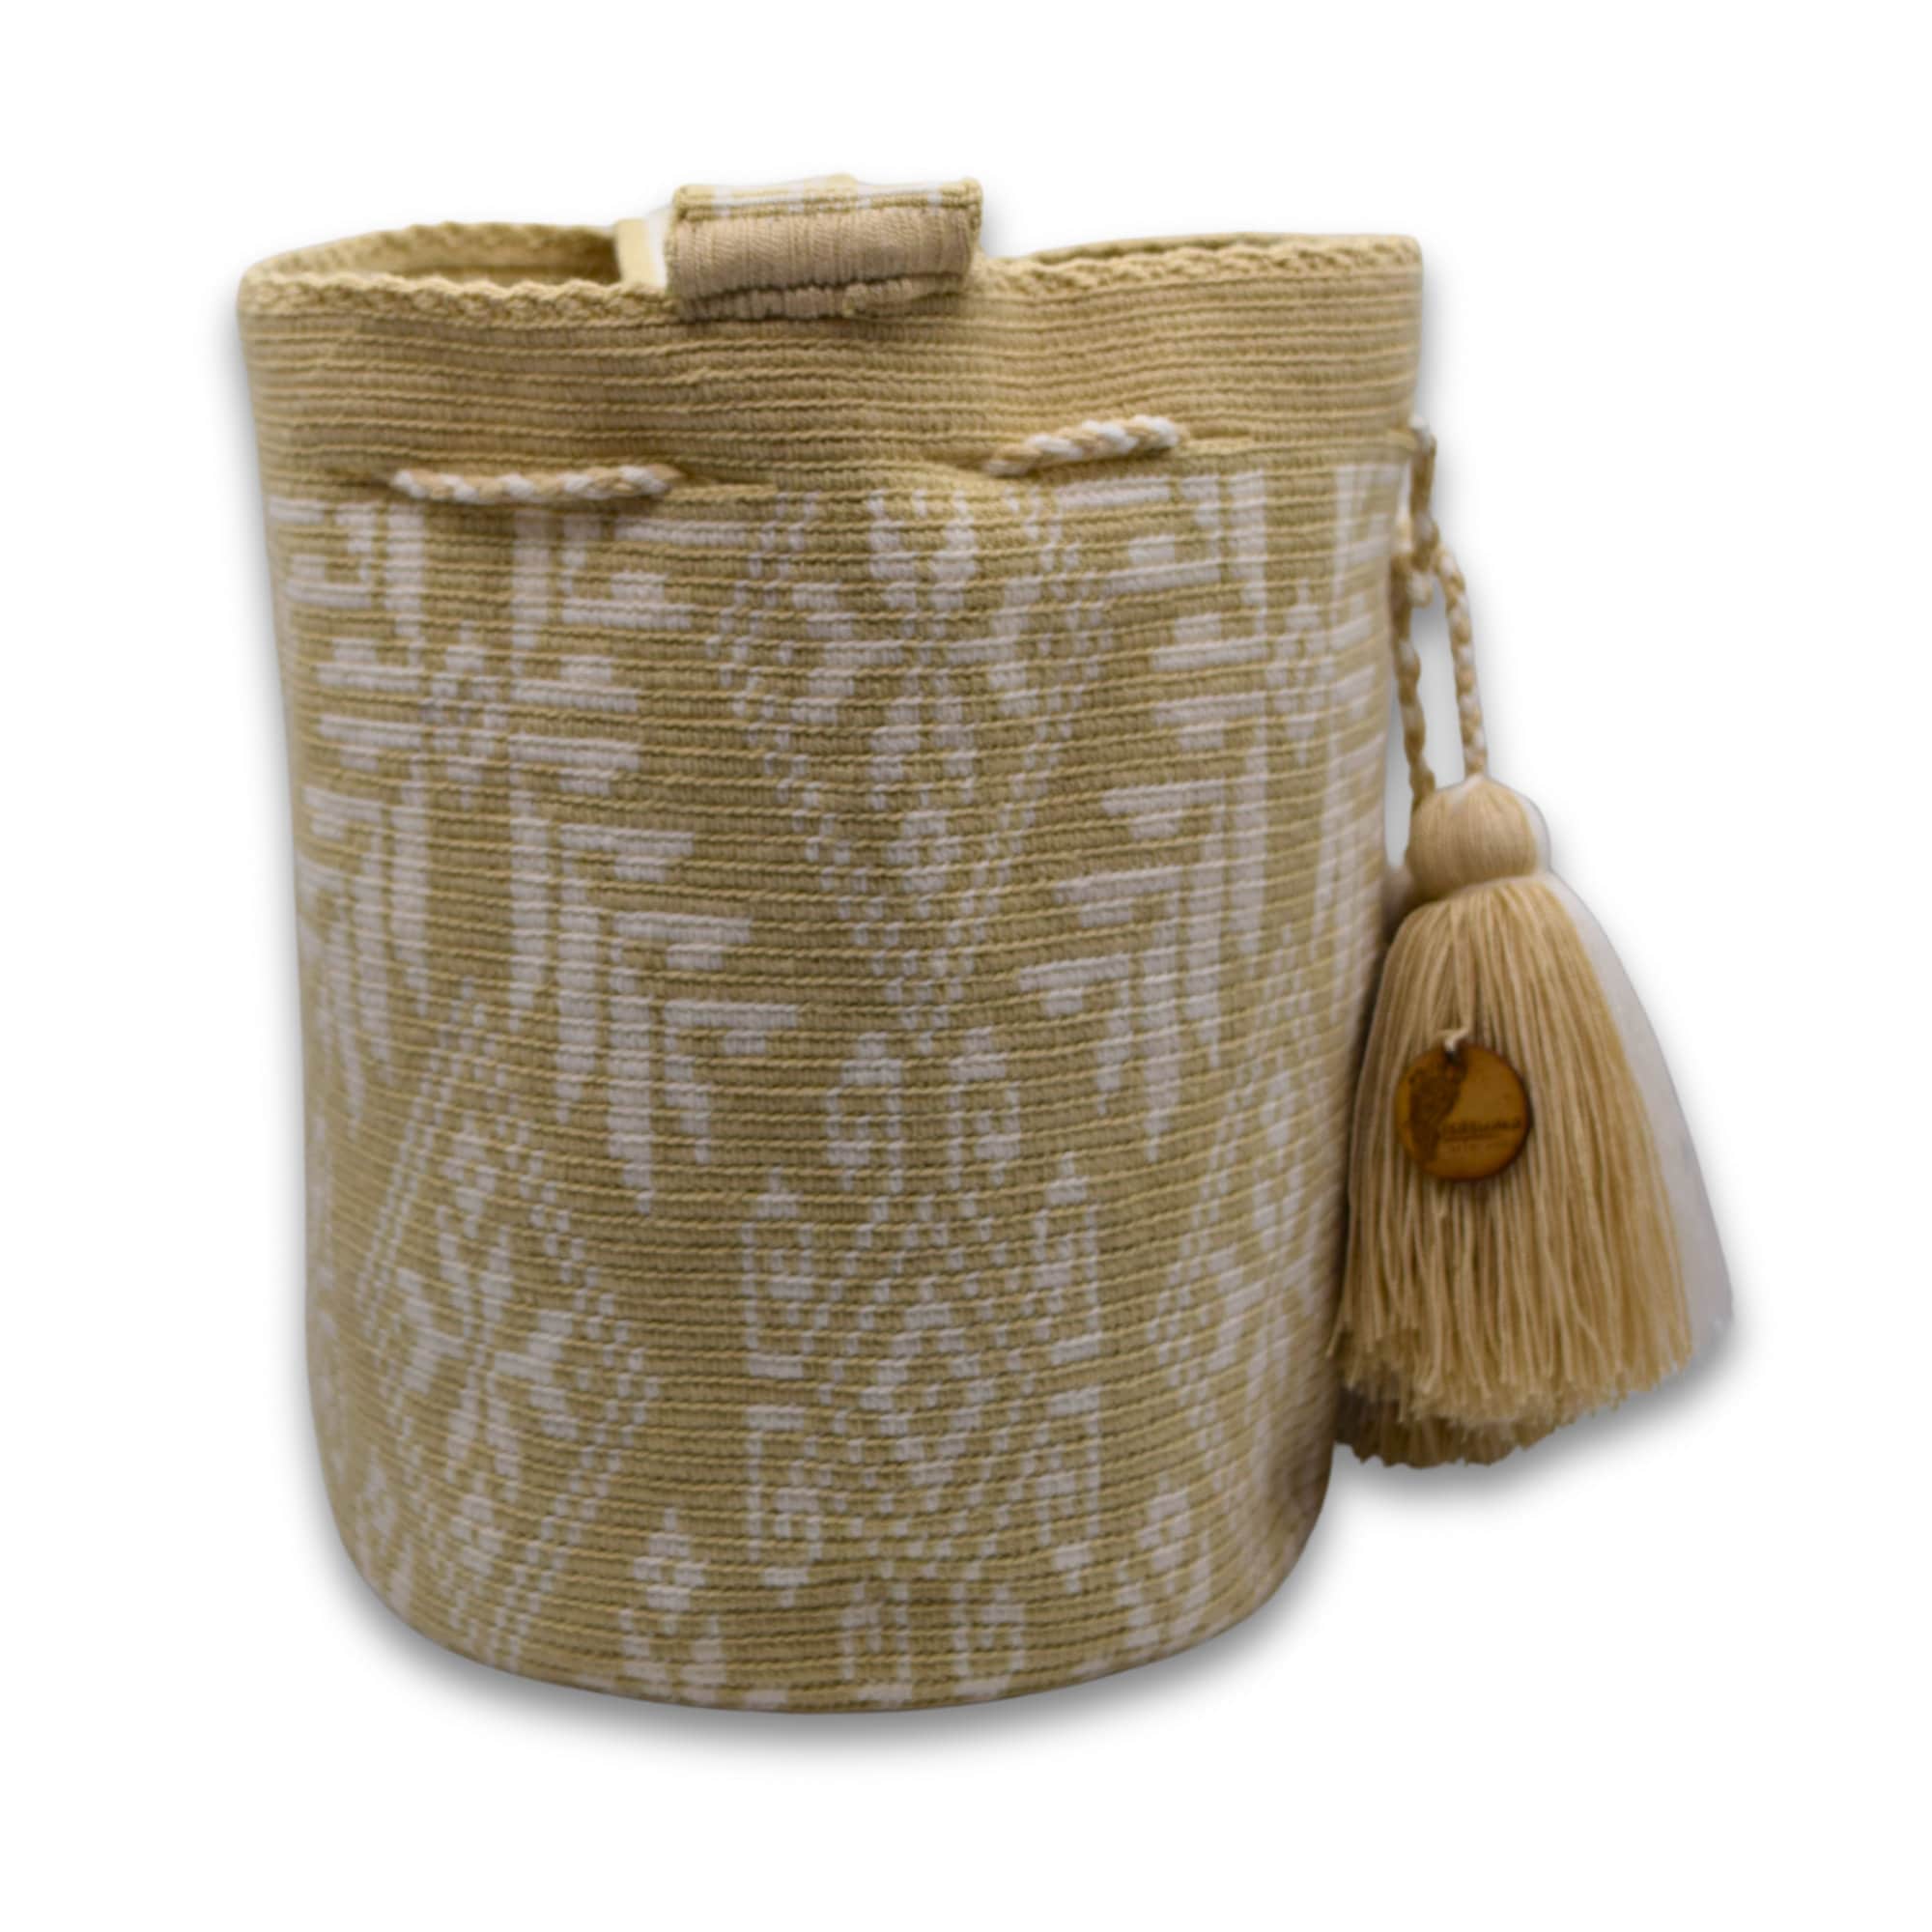 Deluxe Wayuu mochila bag | Large Tradicional | Beige and White Figures